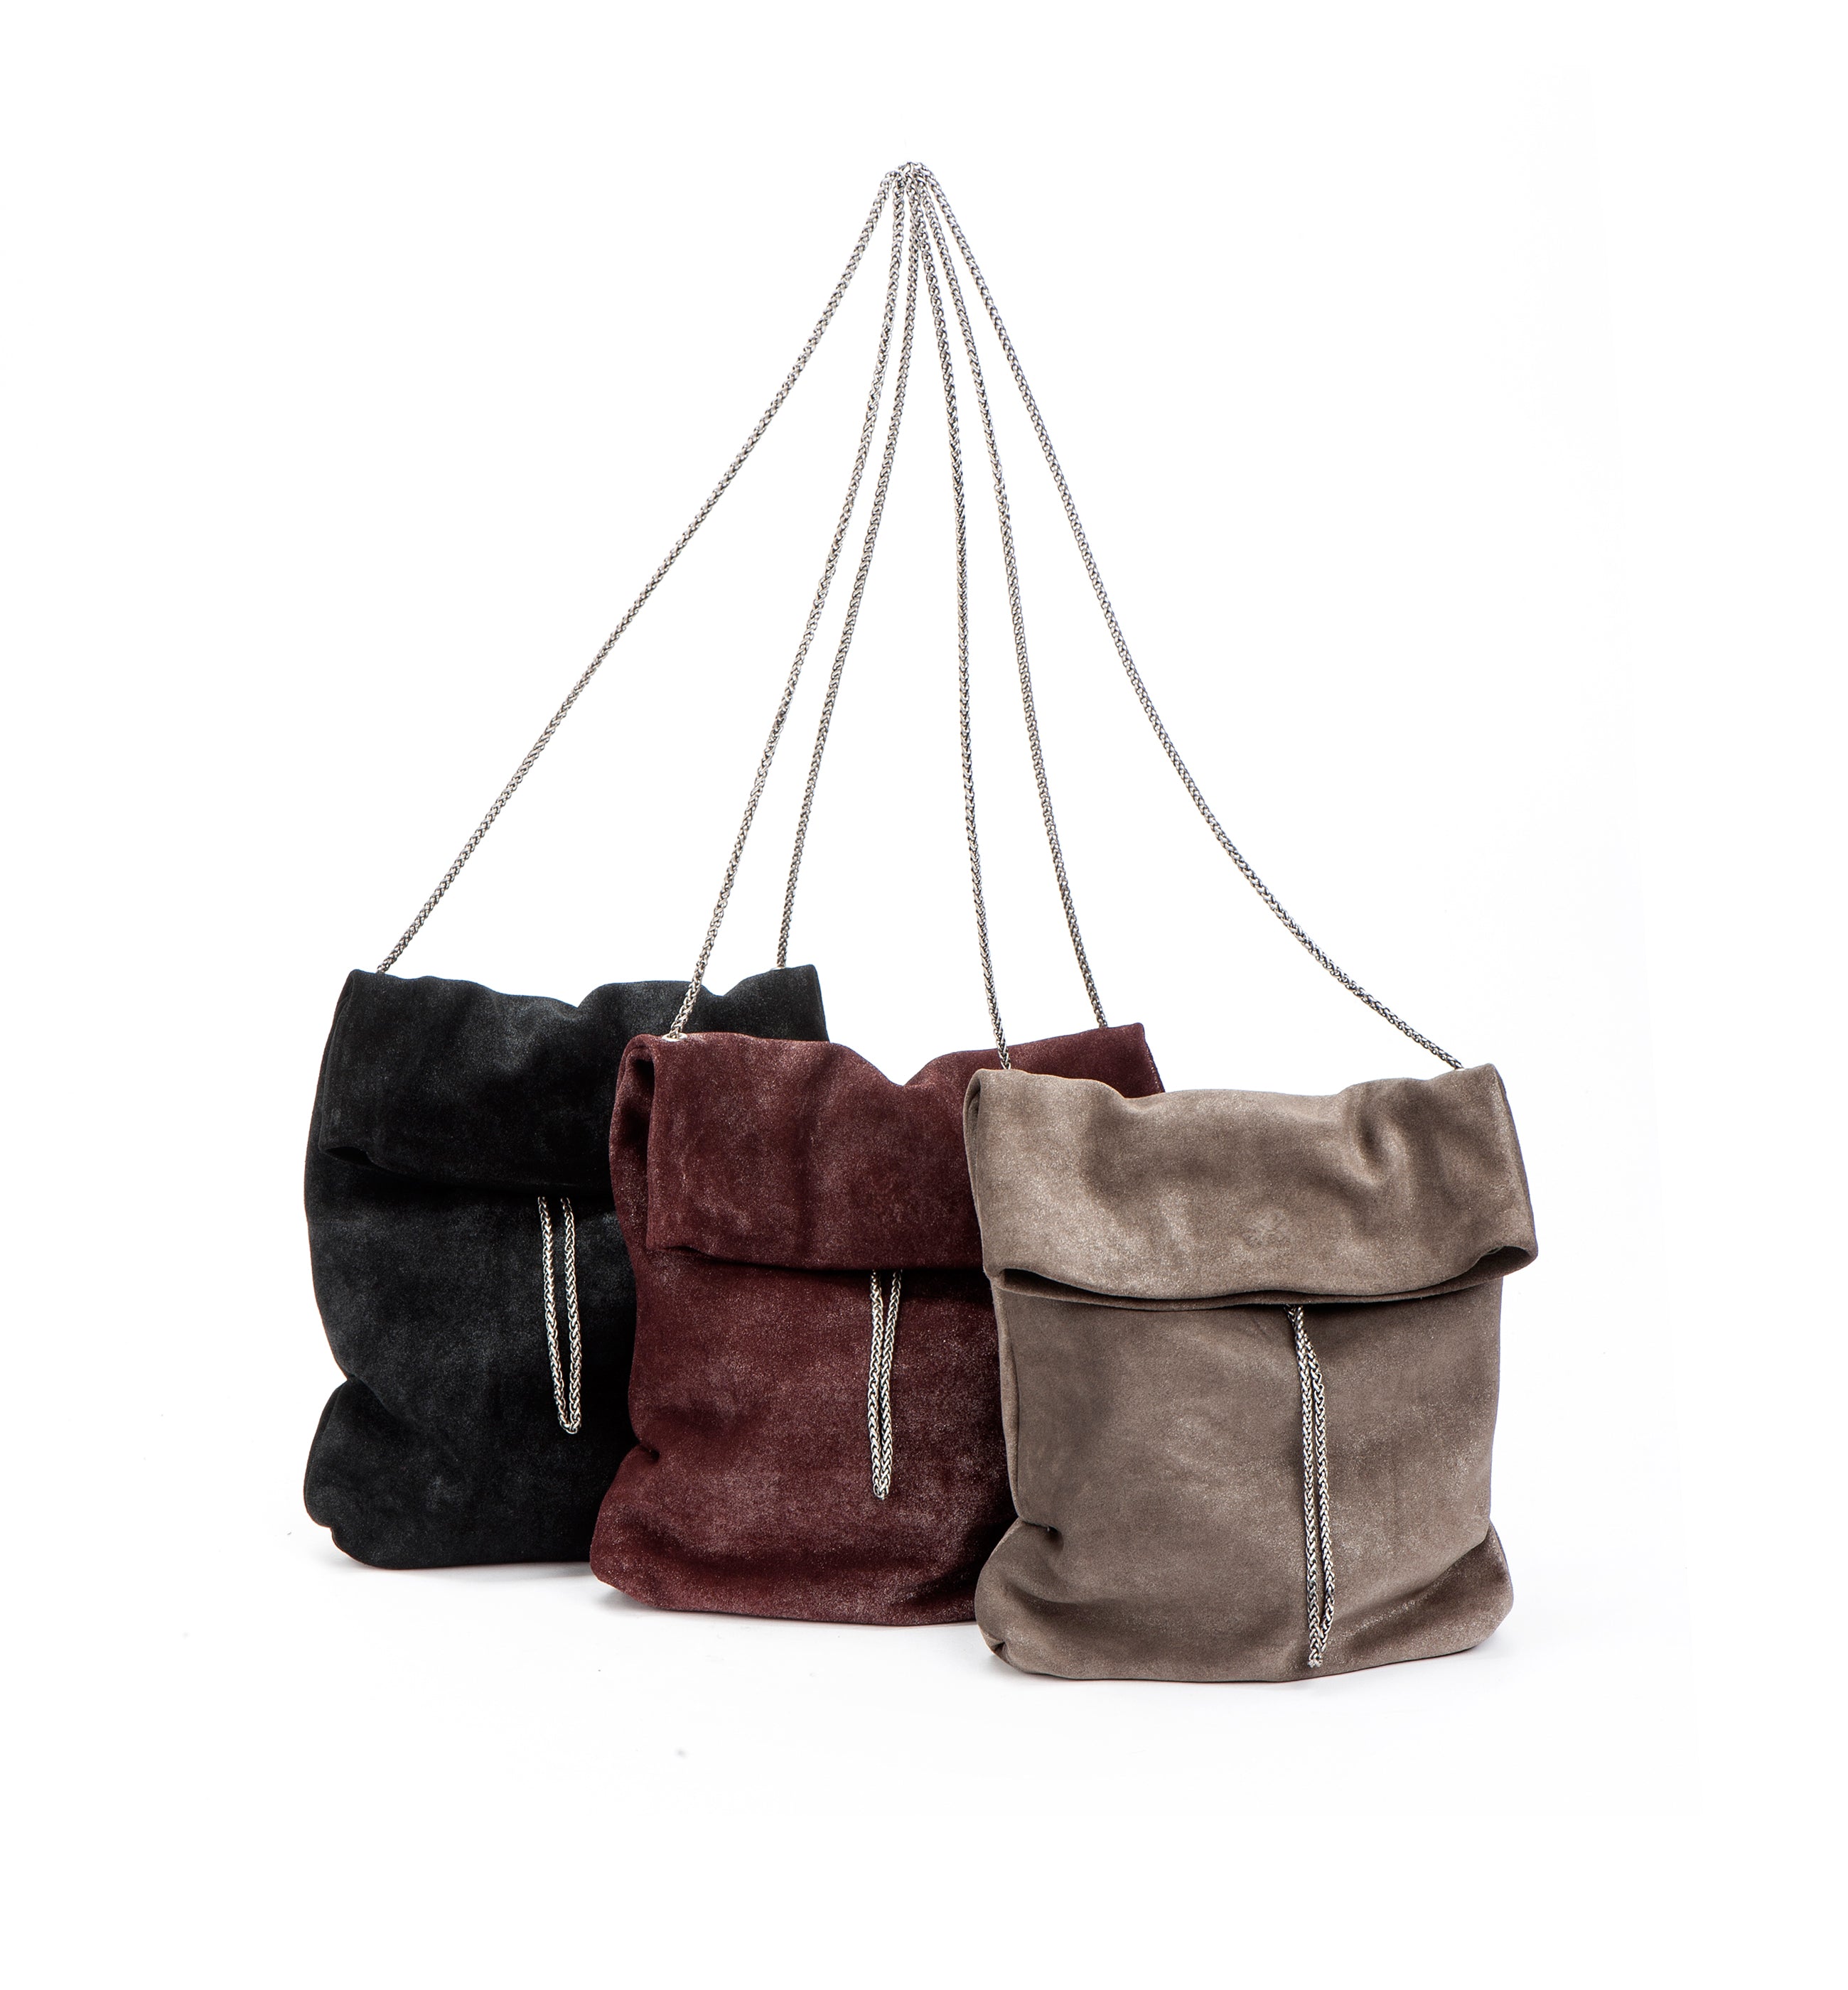 Black suede elegant evening metal chain purse woman small bag